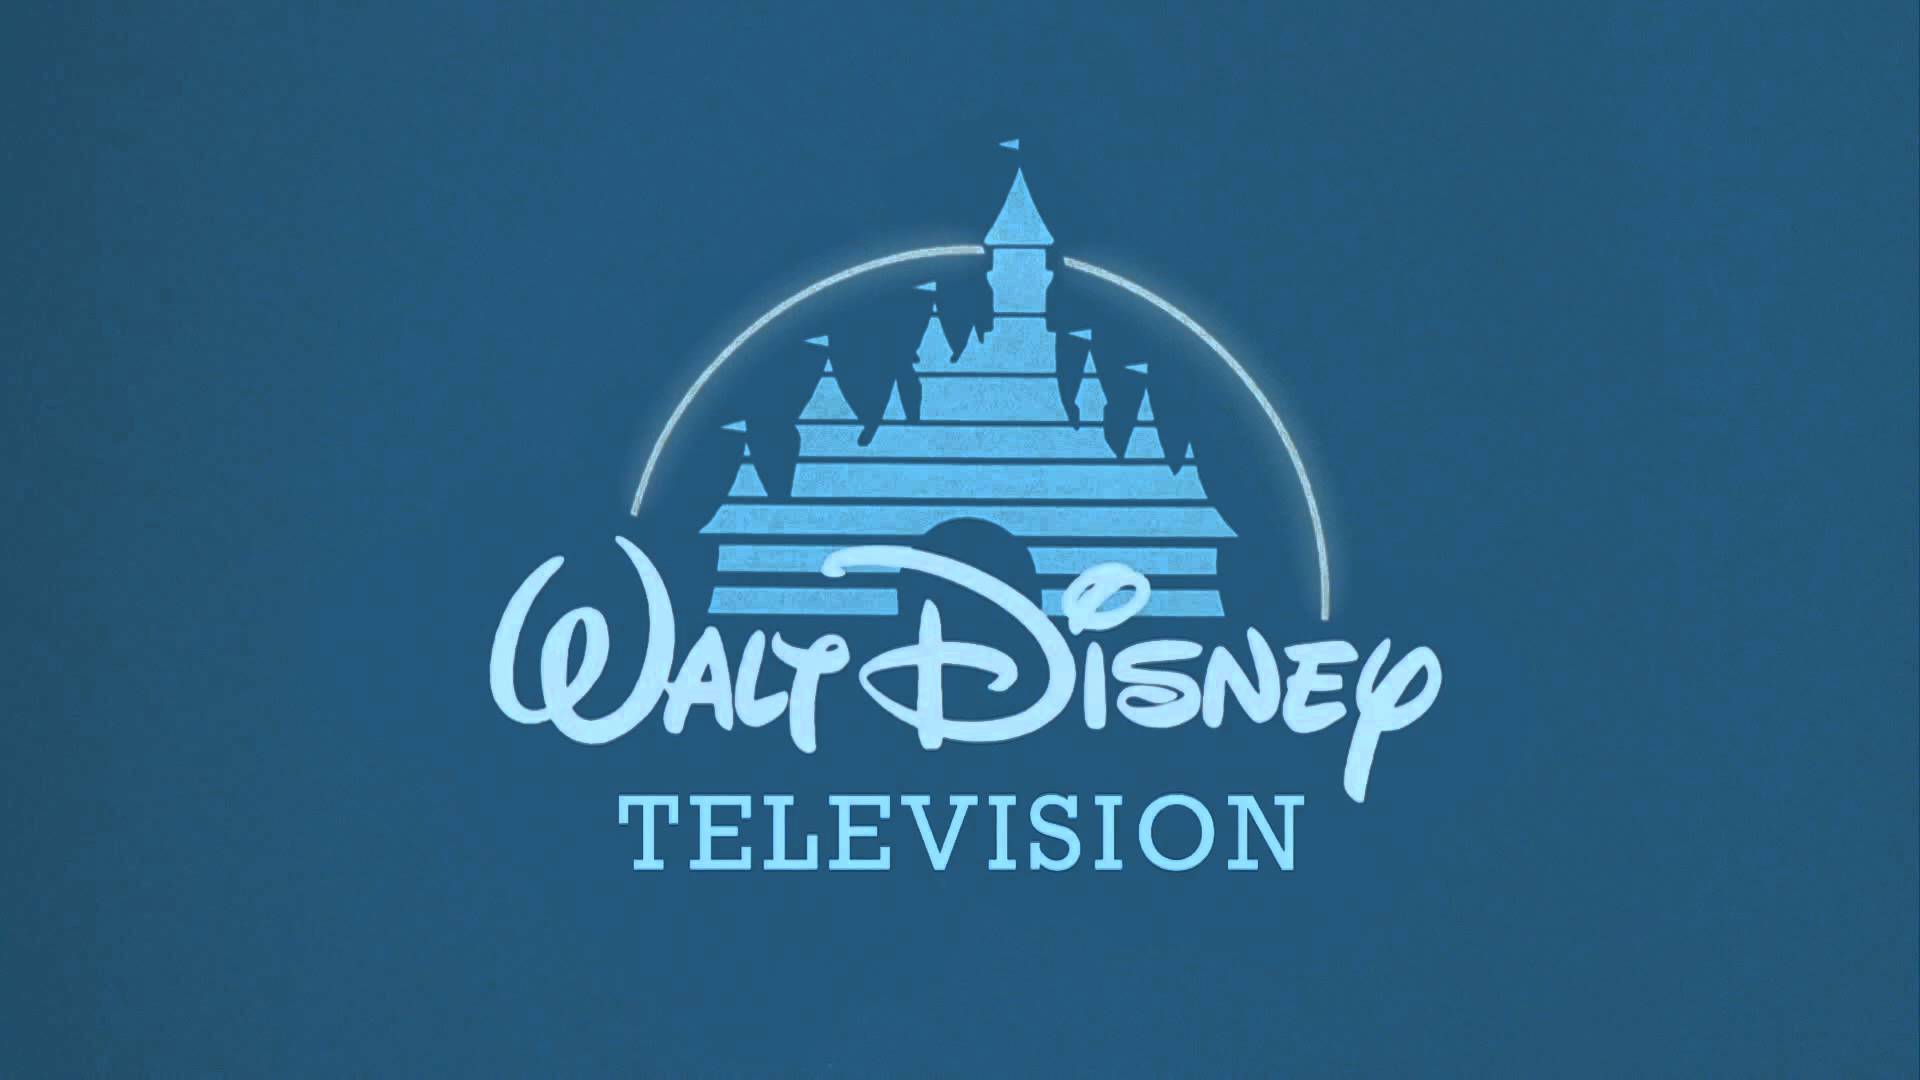 Walt disney television Logos